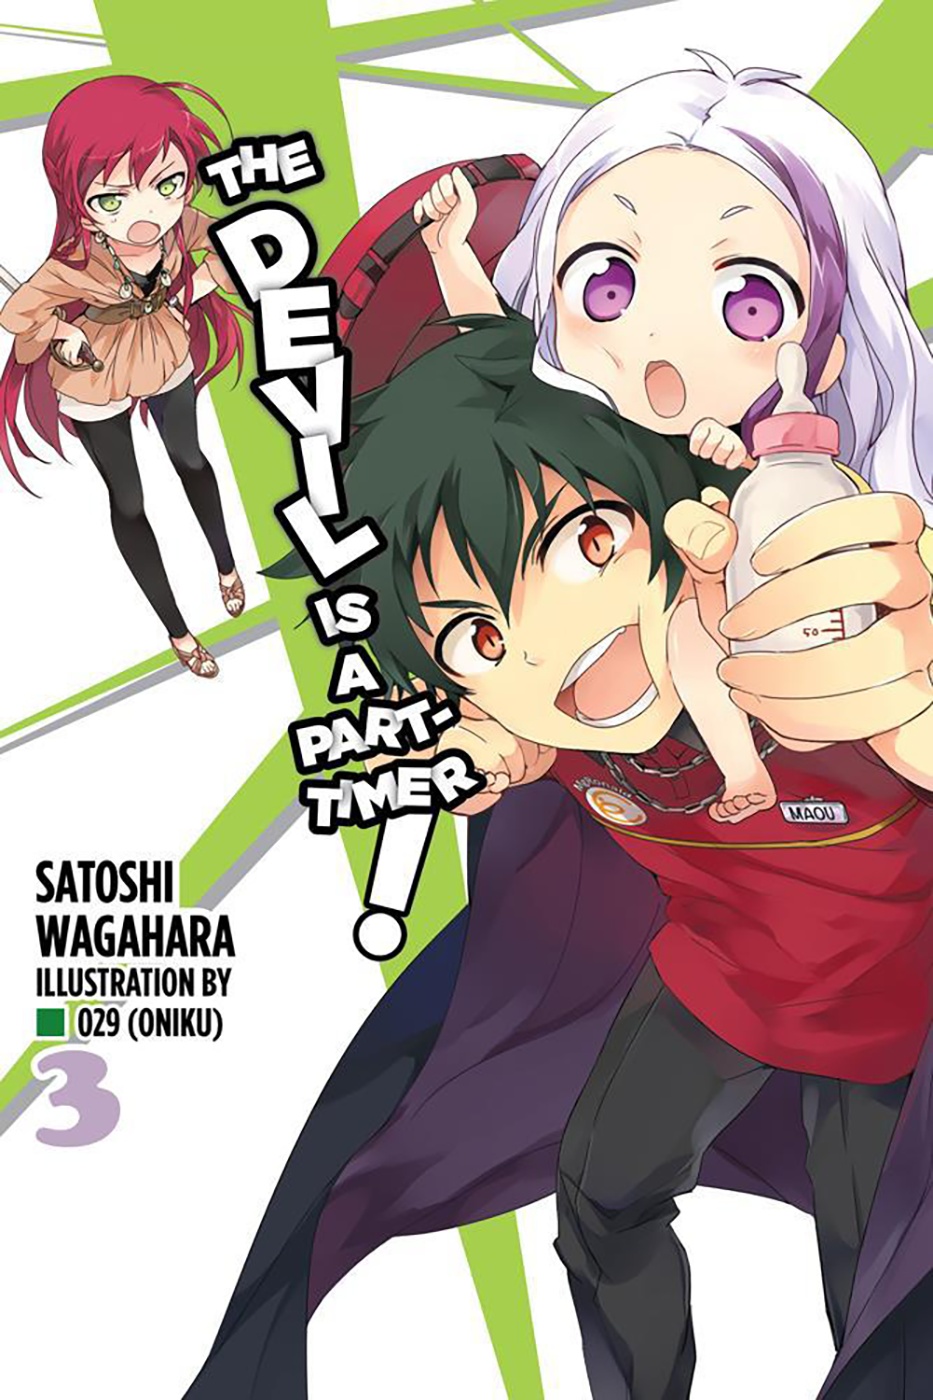 Hataraku Maou-sama! 2º Temporada Anunciada - Manga Livre RS